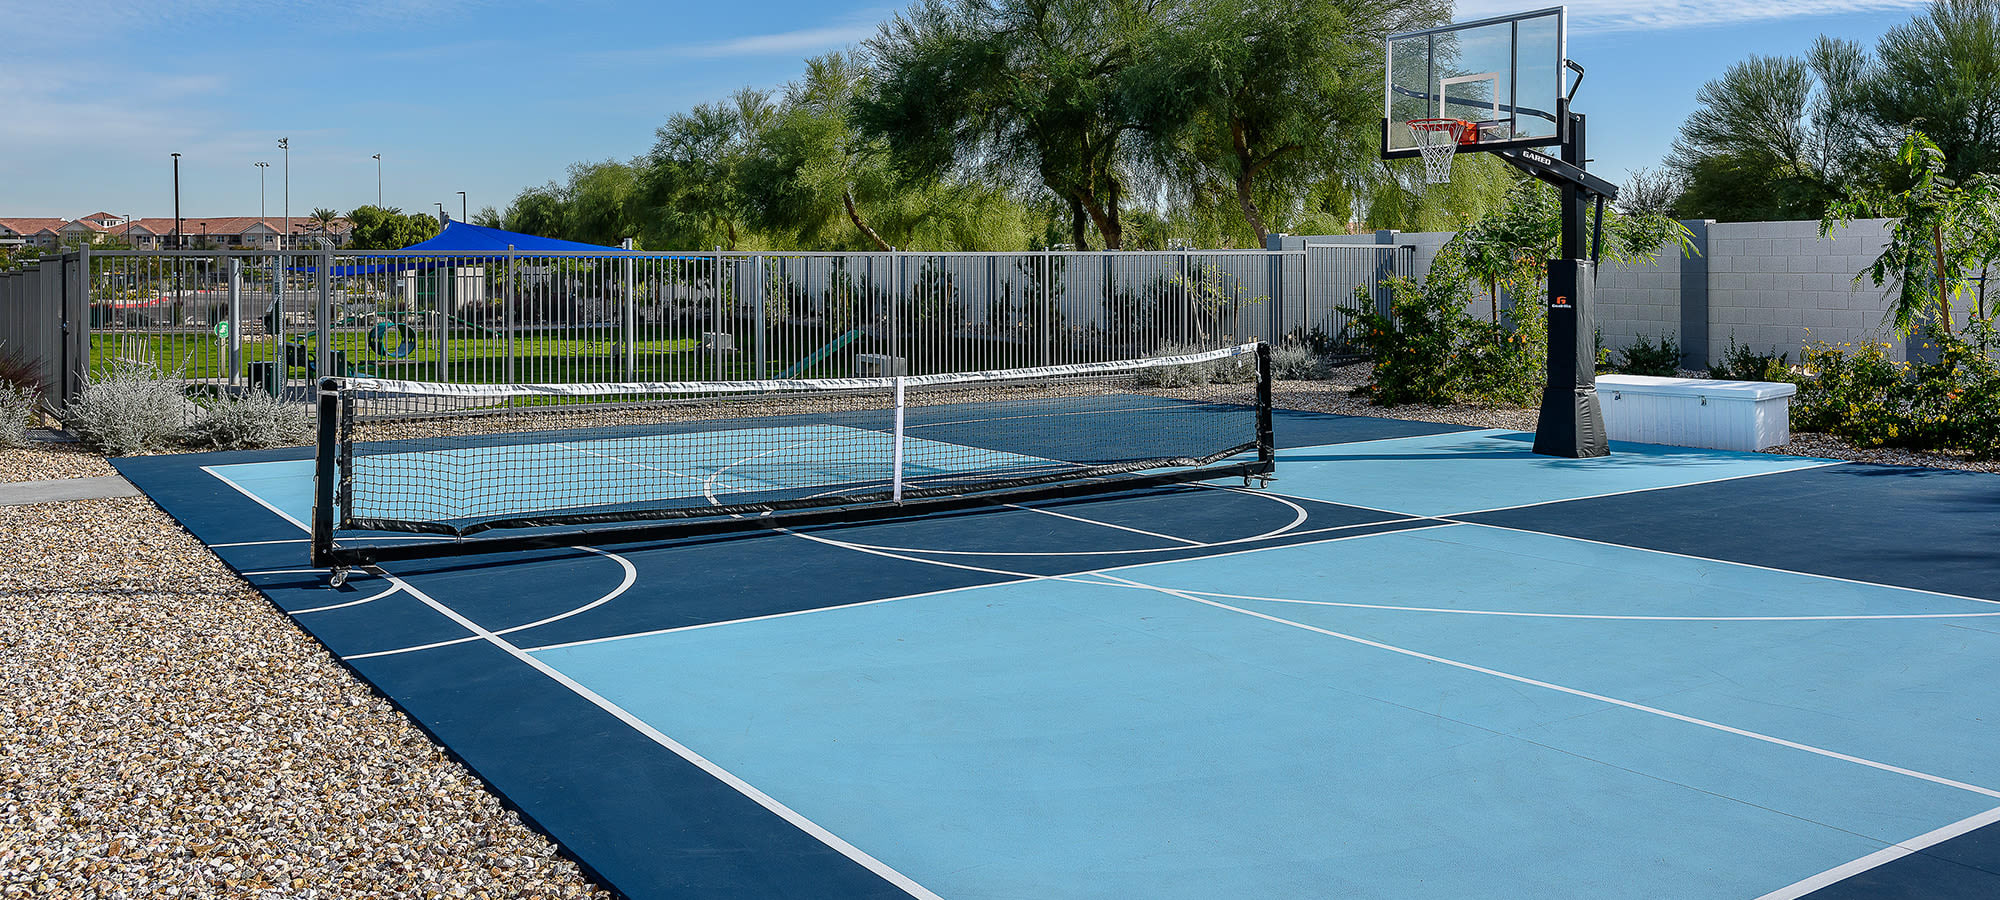 Basketball and pickleball court at Aviva Goodyear in Goodyear, Arizona